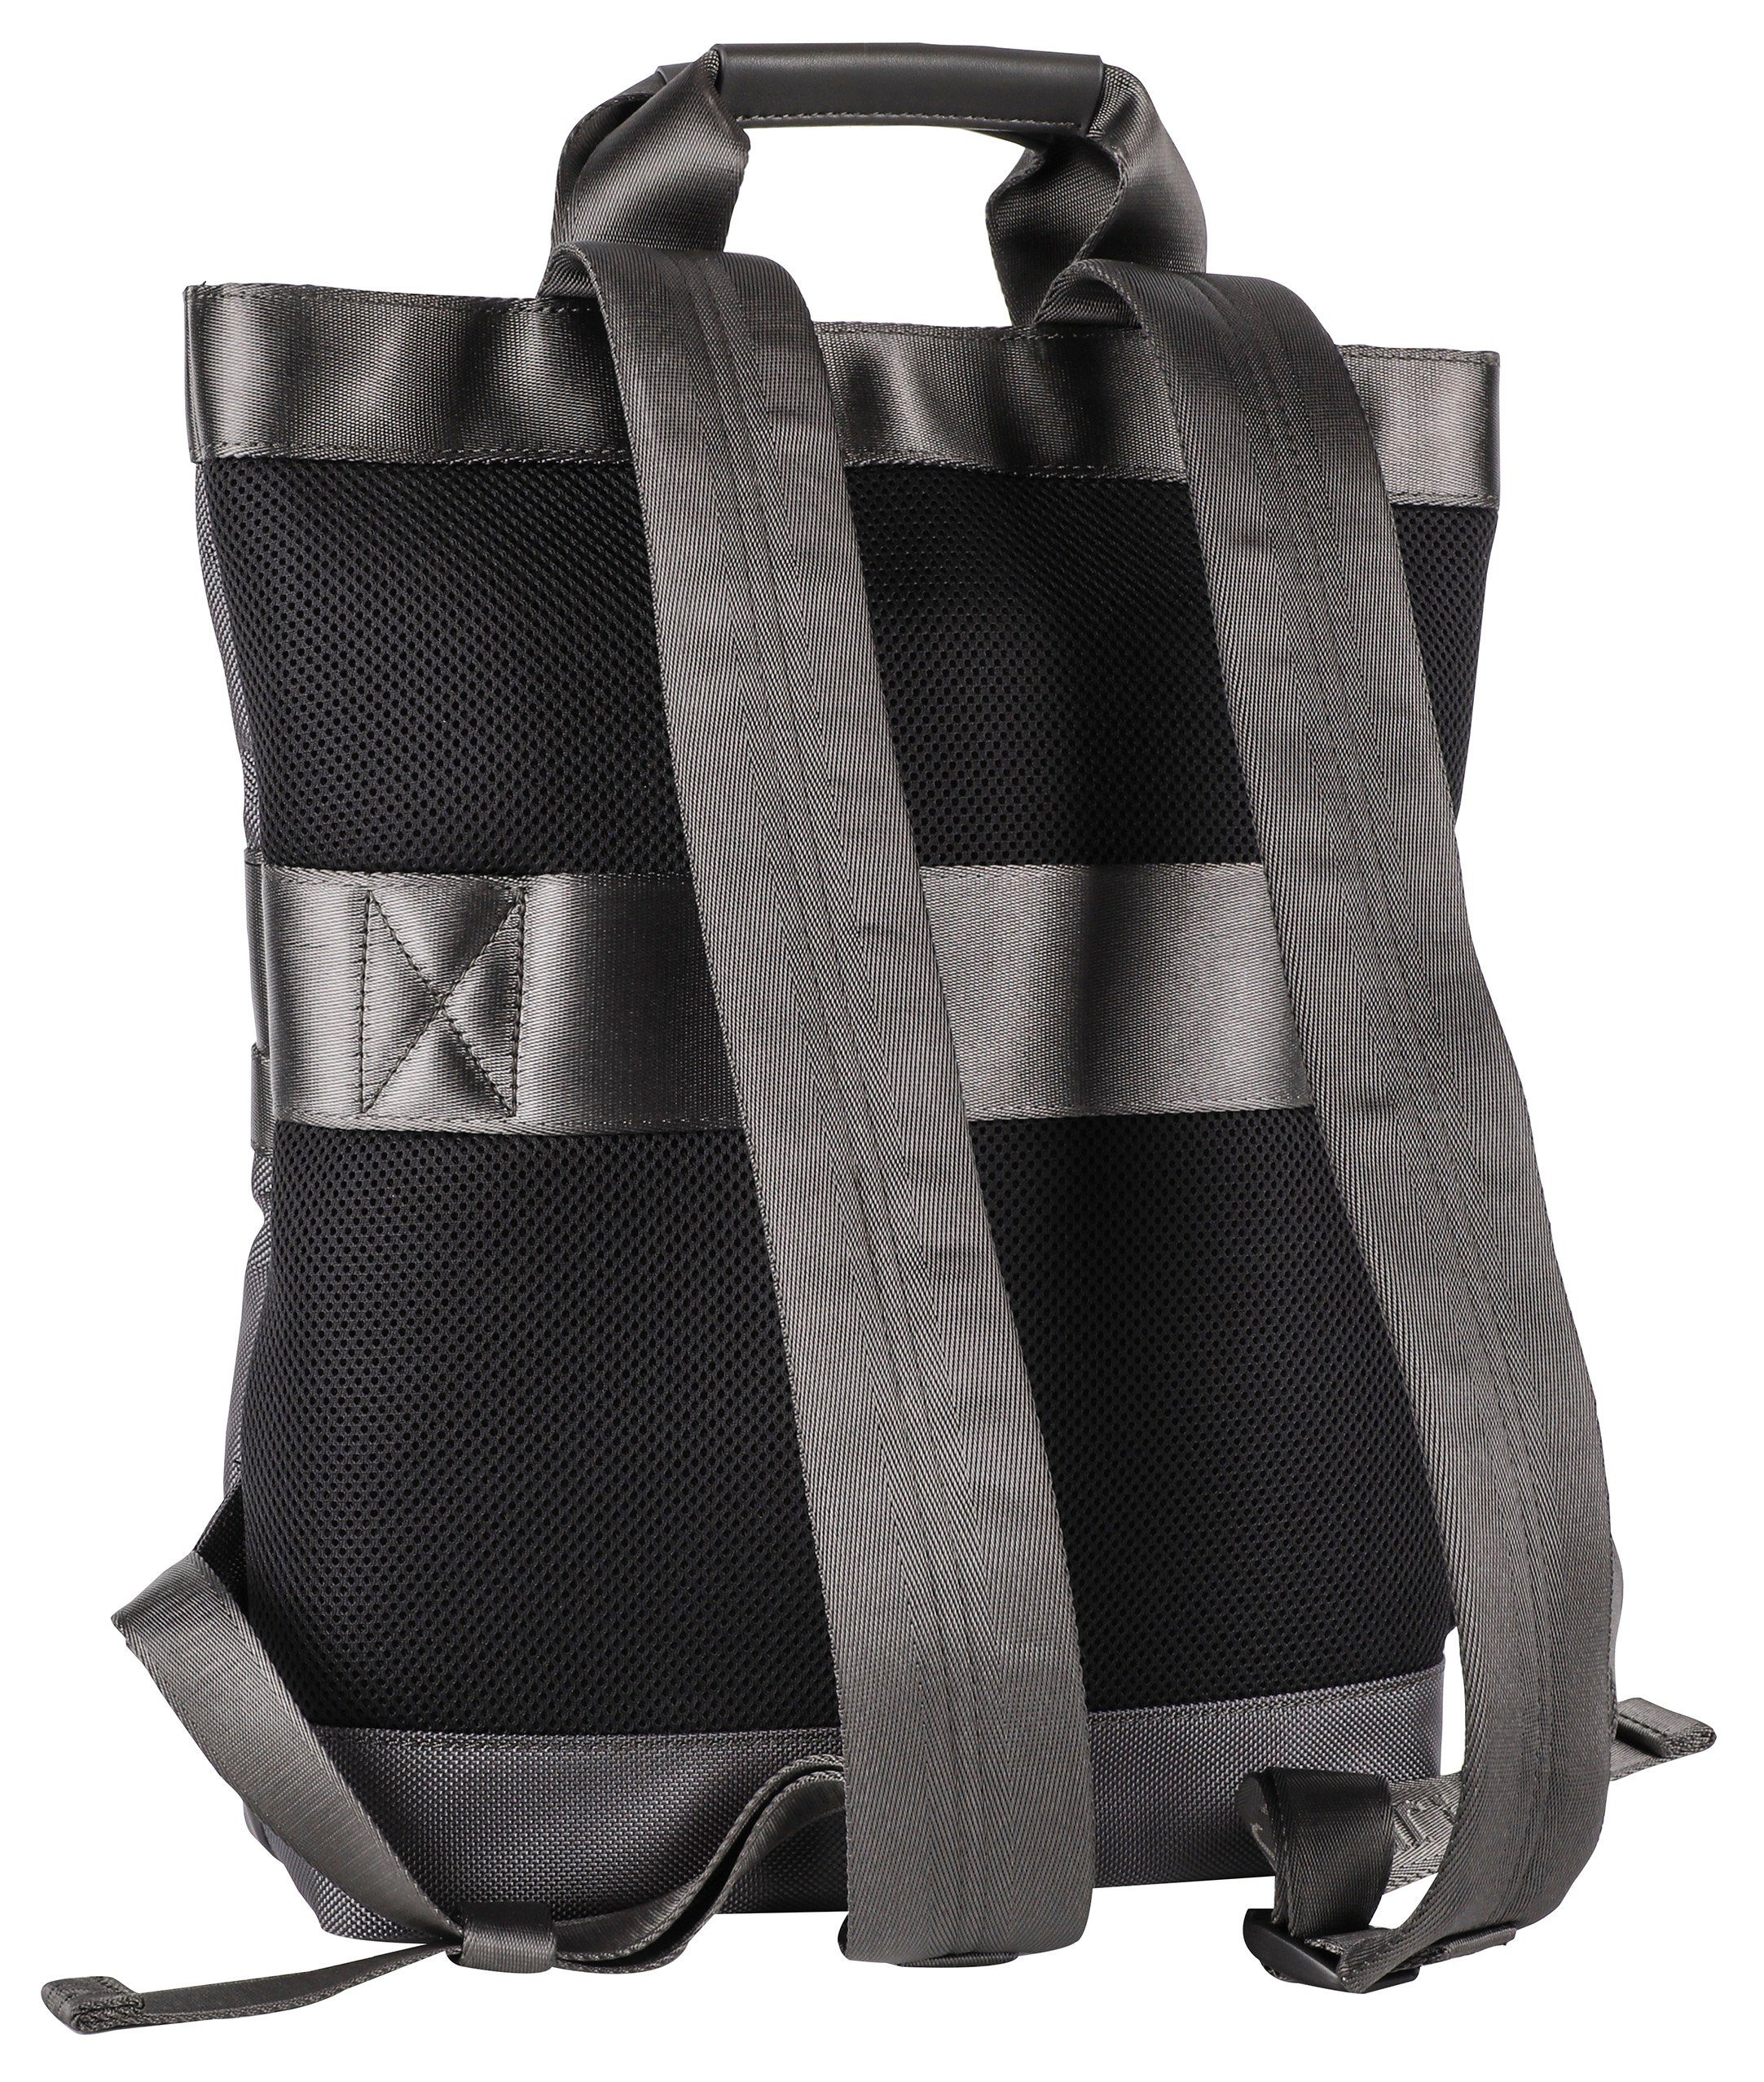 Joop Jeans Cityrucksack modica svz, falk dunkelgrau backpack Reißverschluss-Vortasche mit